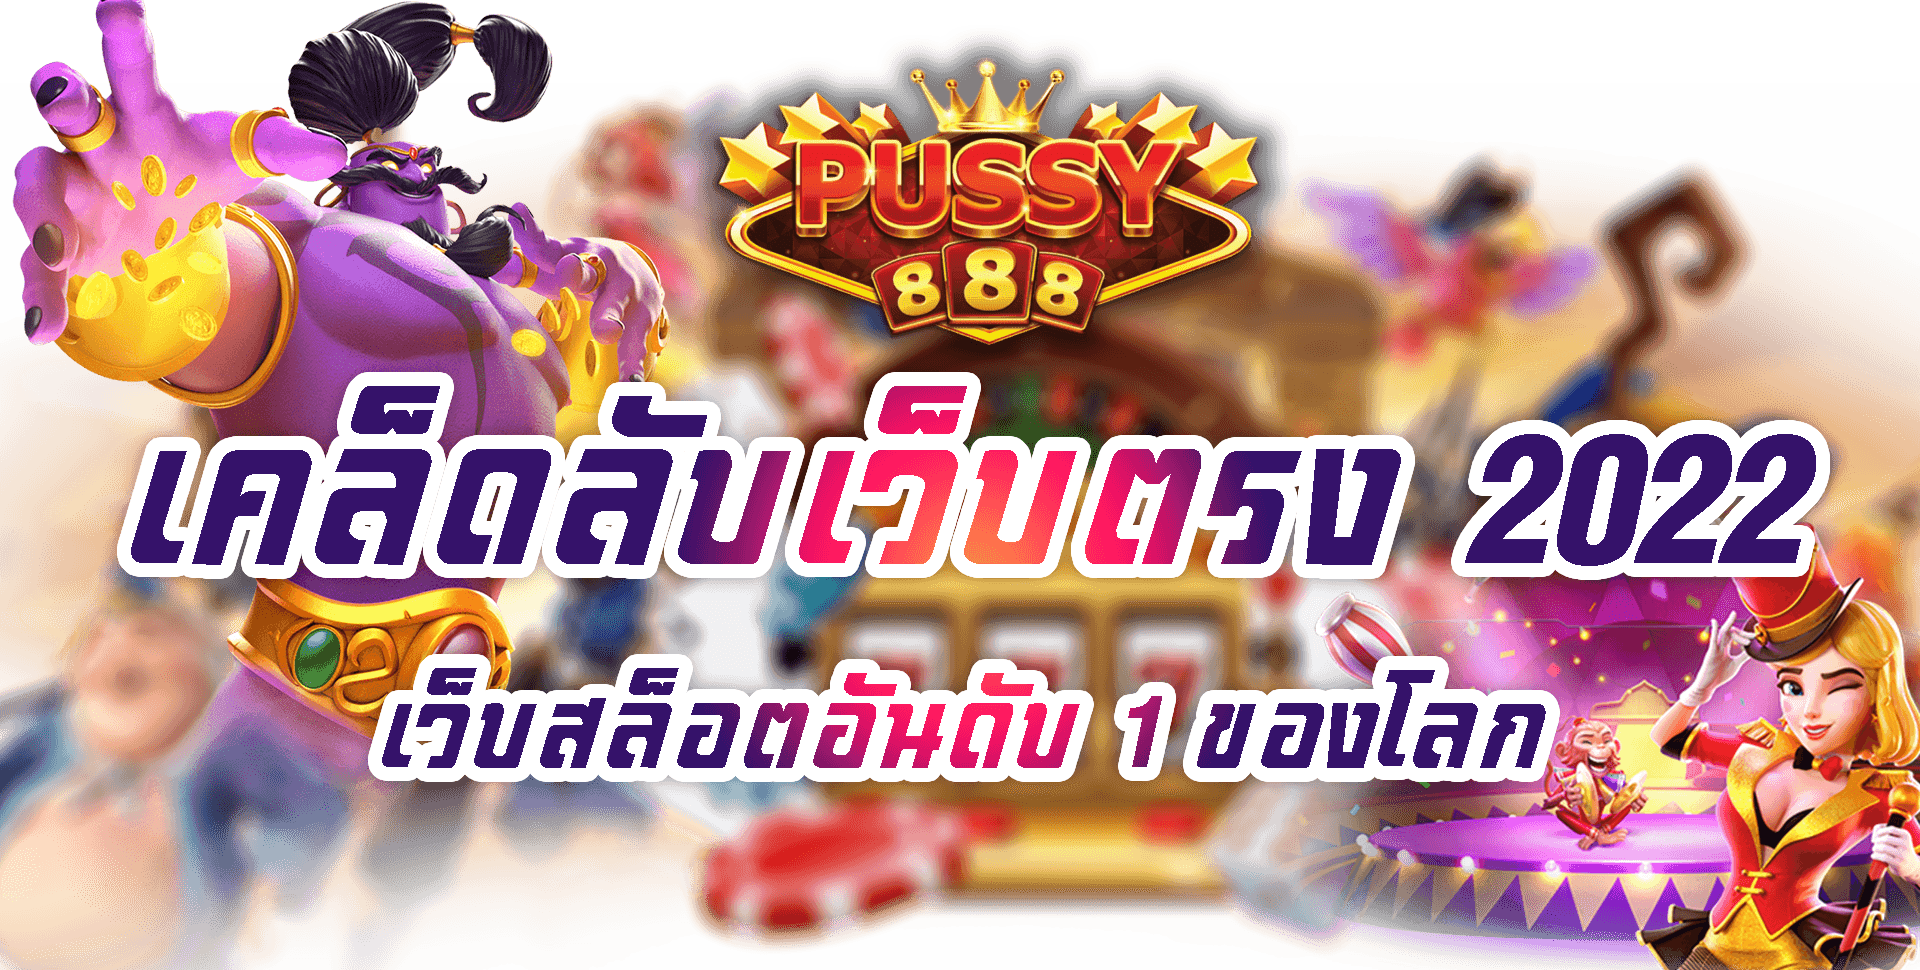 Pussy888-2022-เว็บสล็อตอันดับ 1 ของโลก